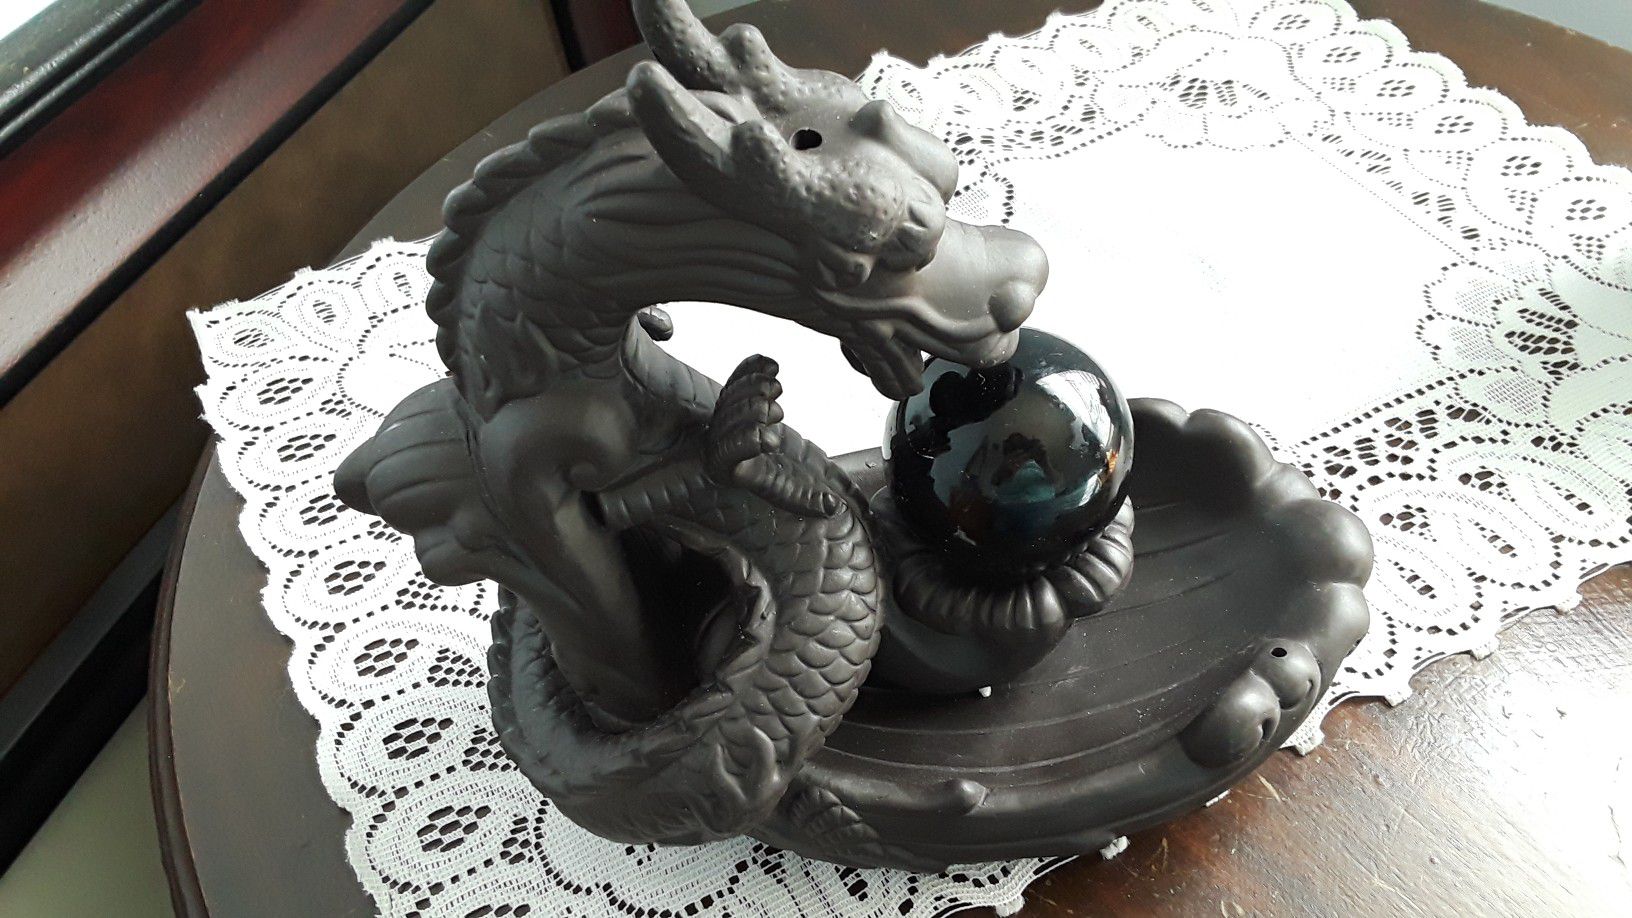 Ceramic Dragon and glass ball incense burner